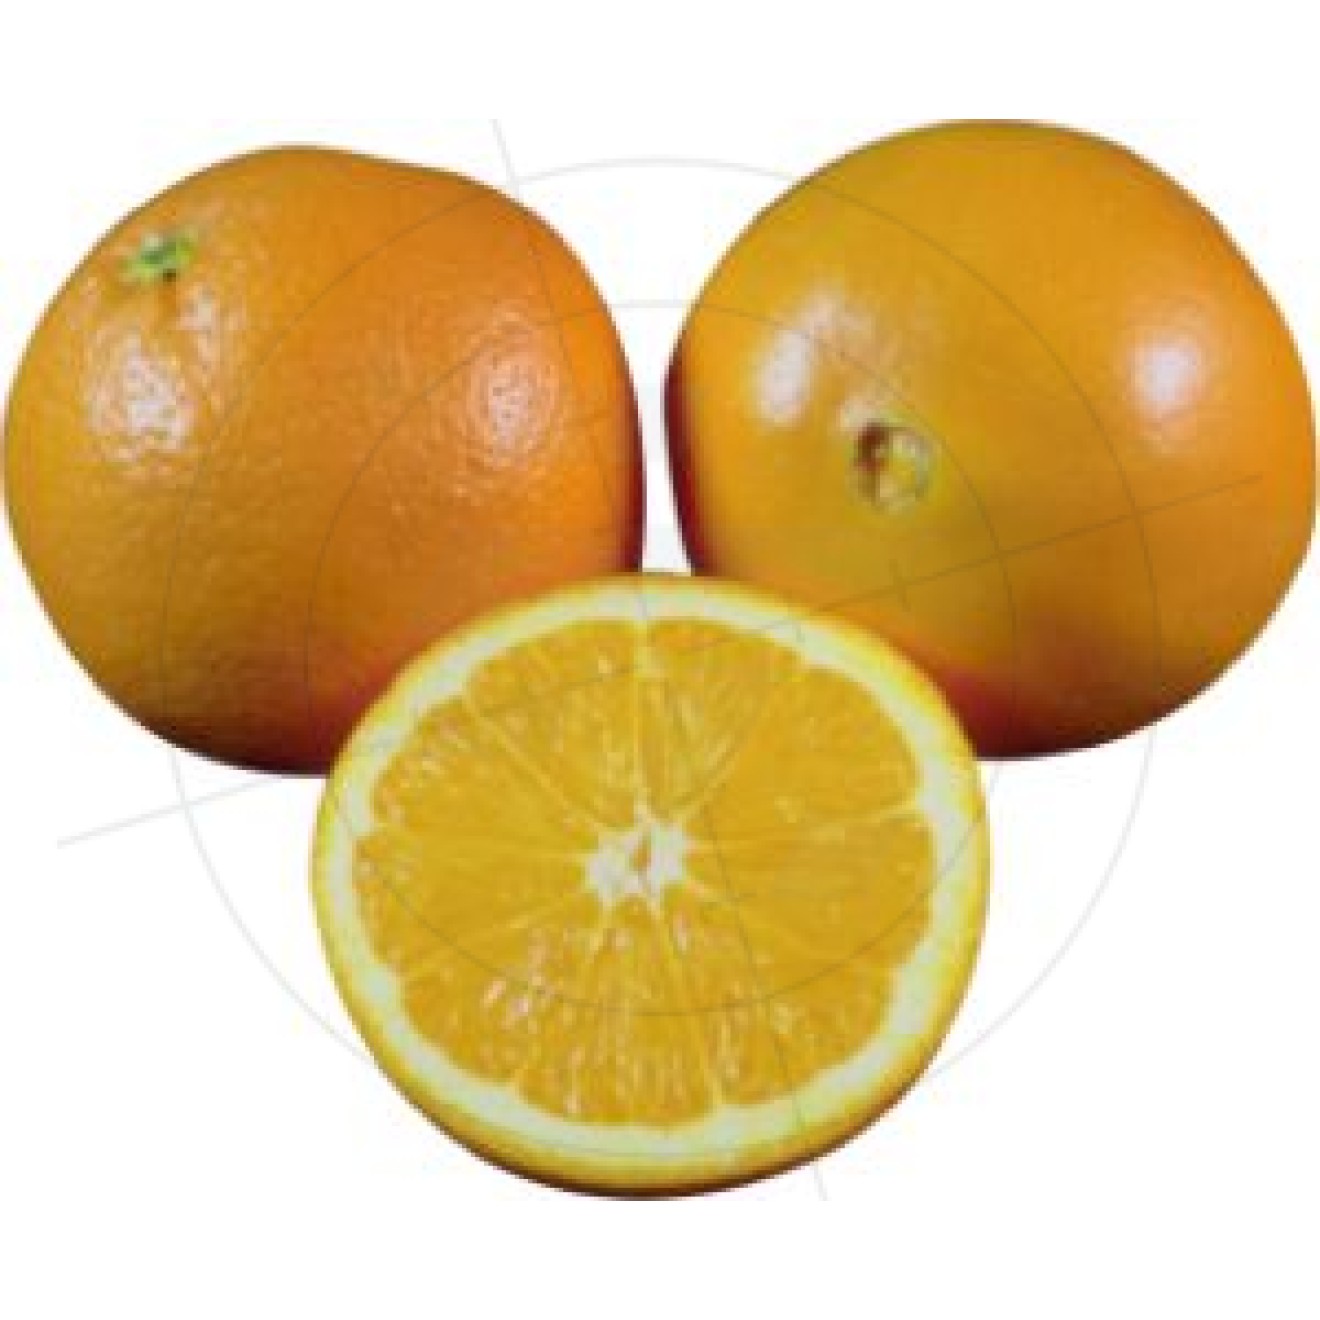 Stickers Oranges, one halved